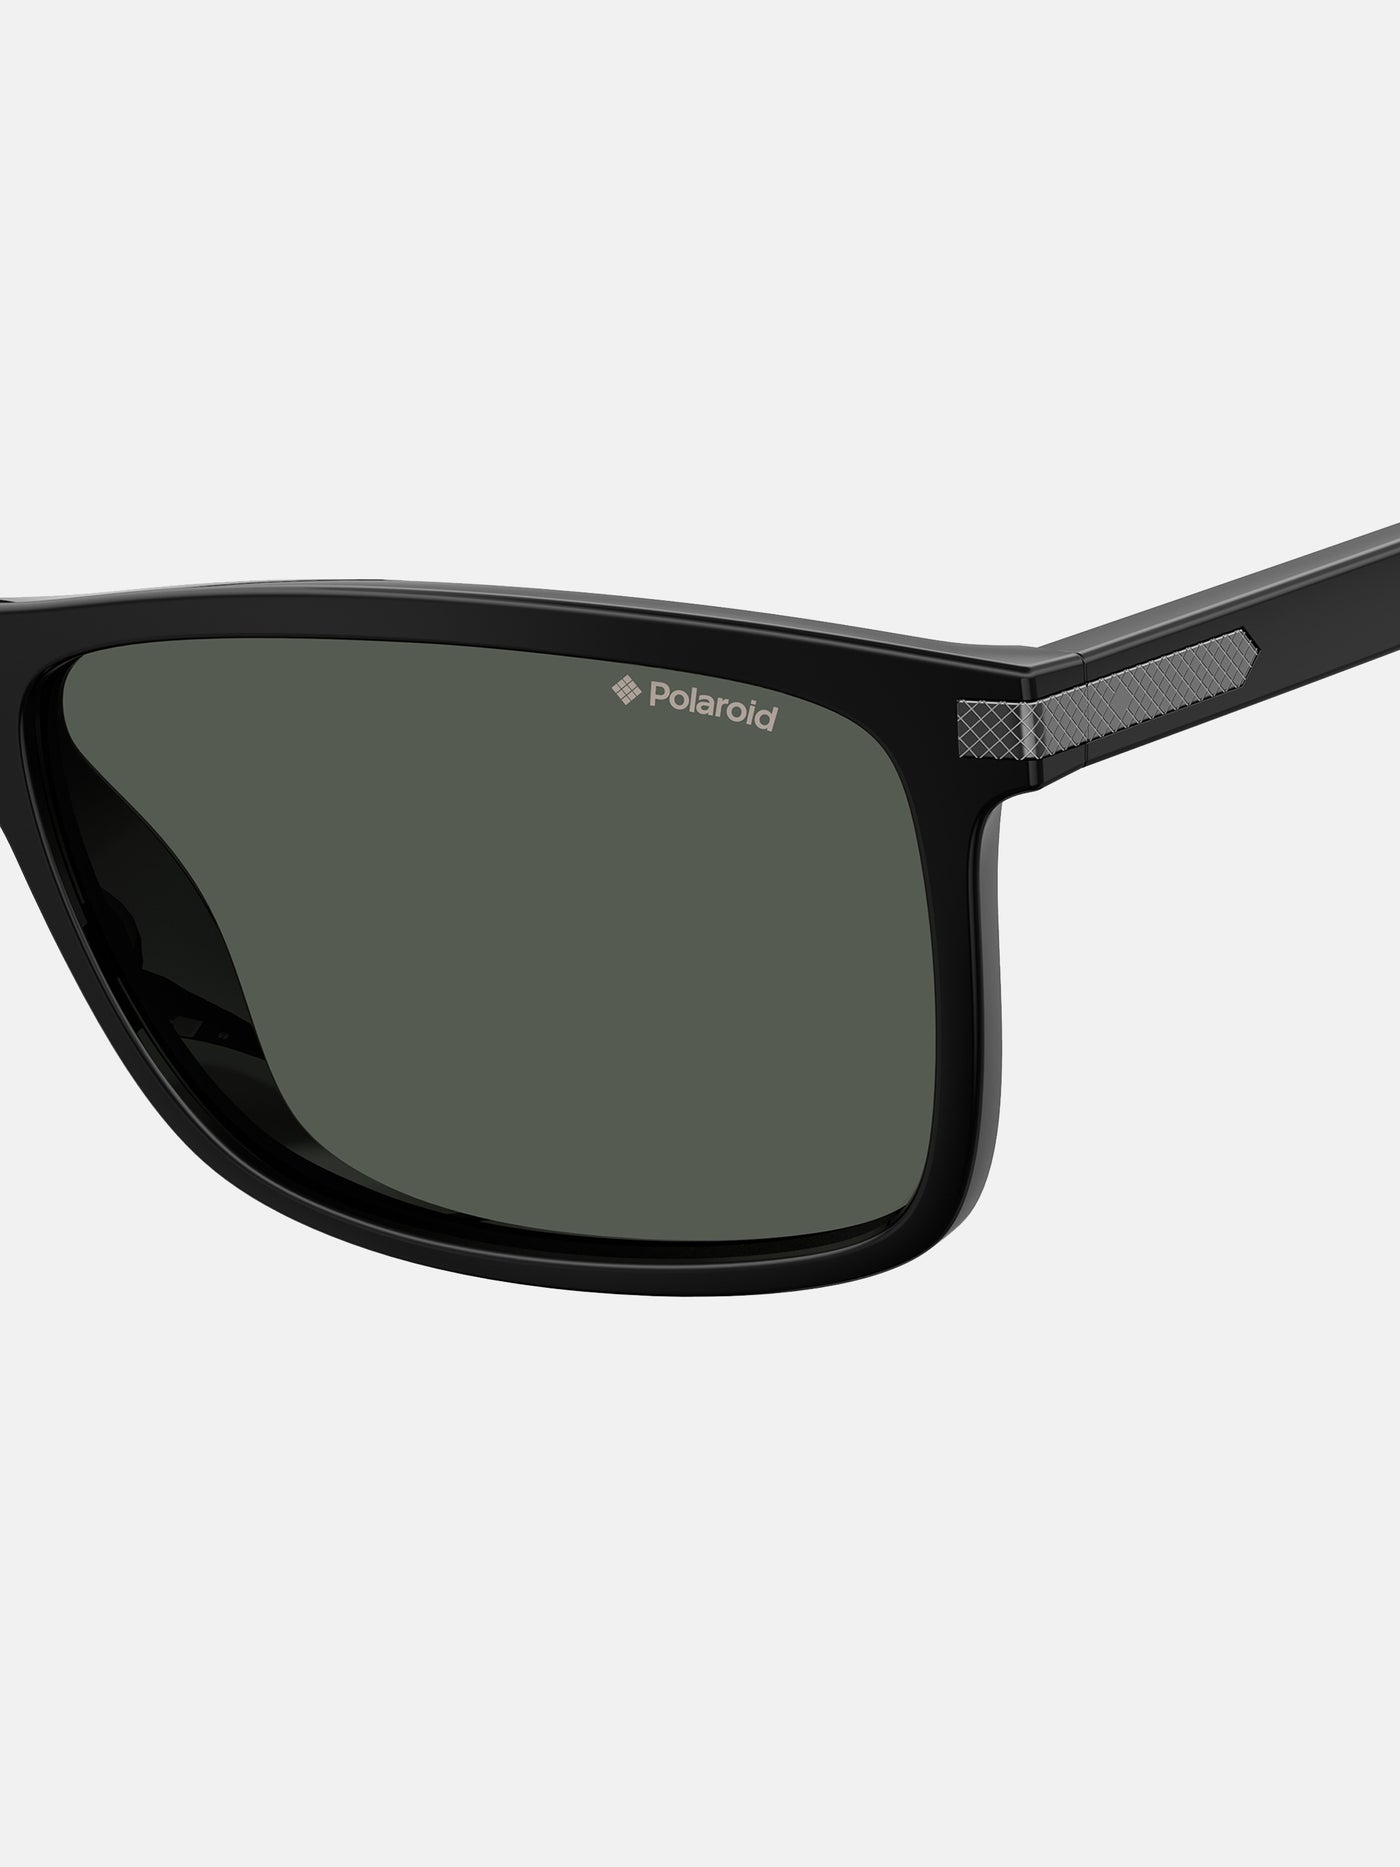 Polaroid sunglasses, square full rim frame